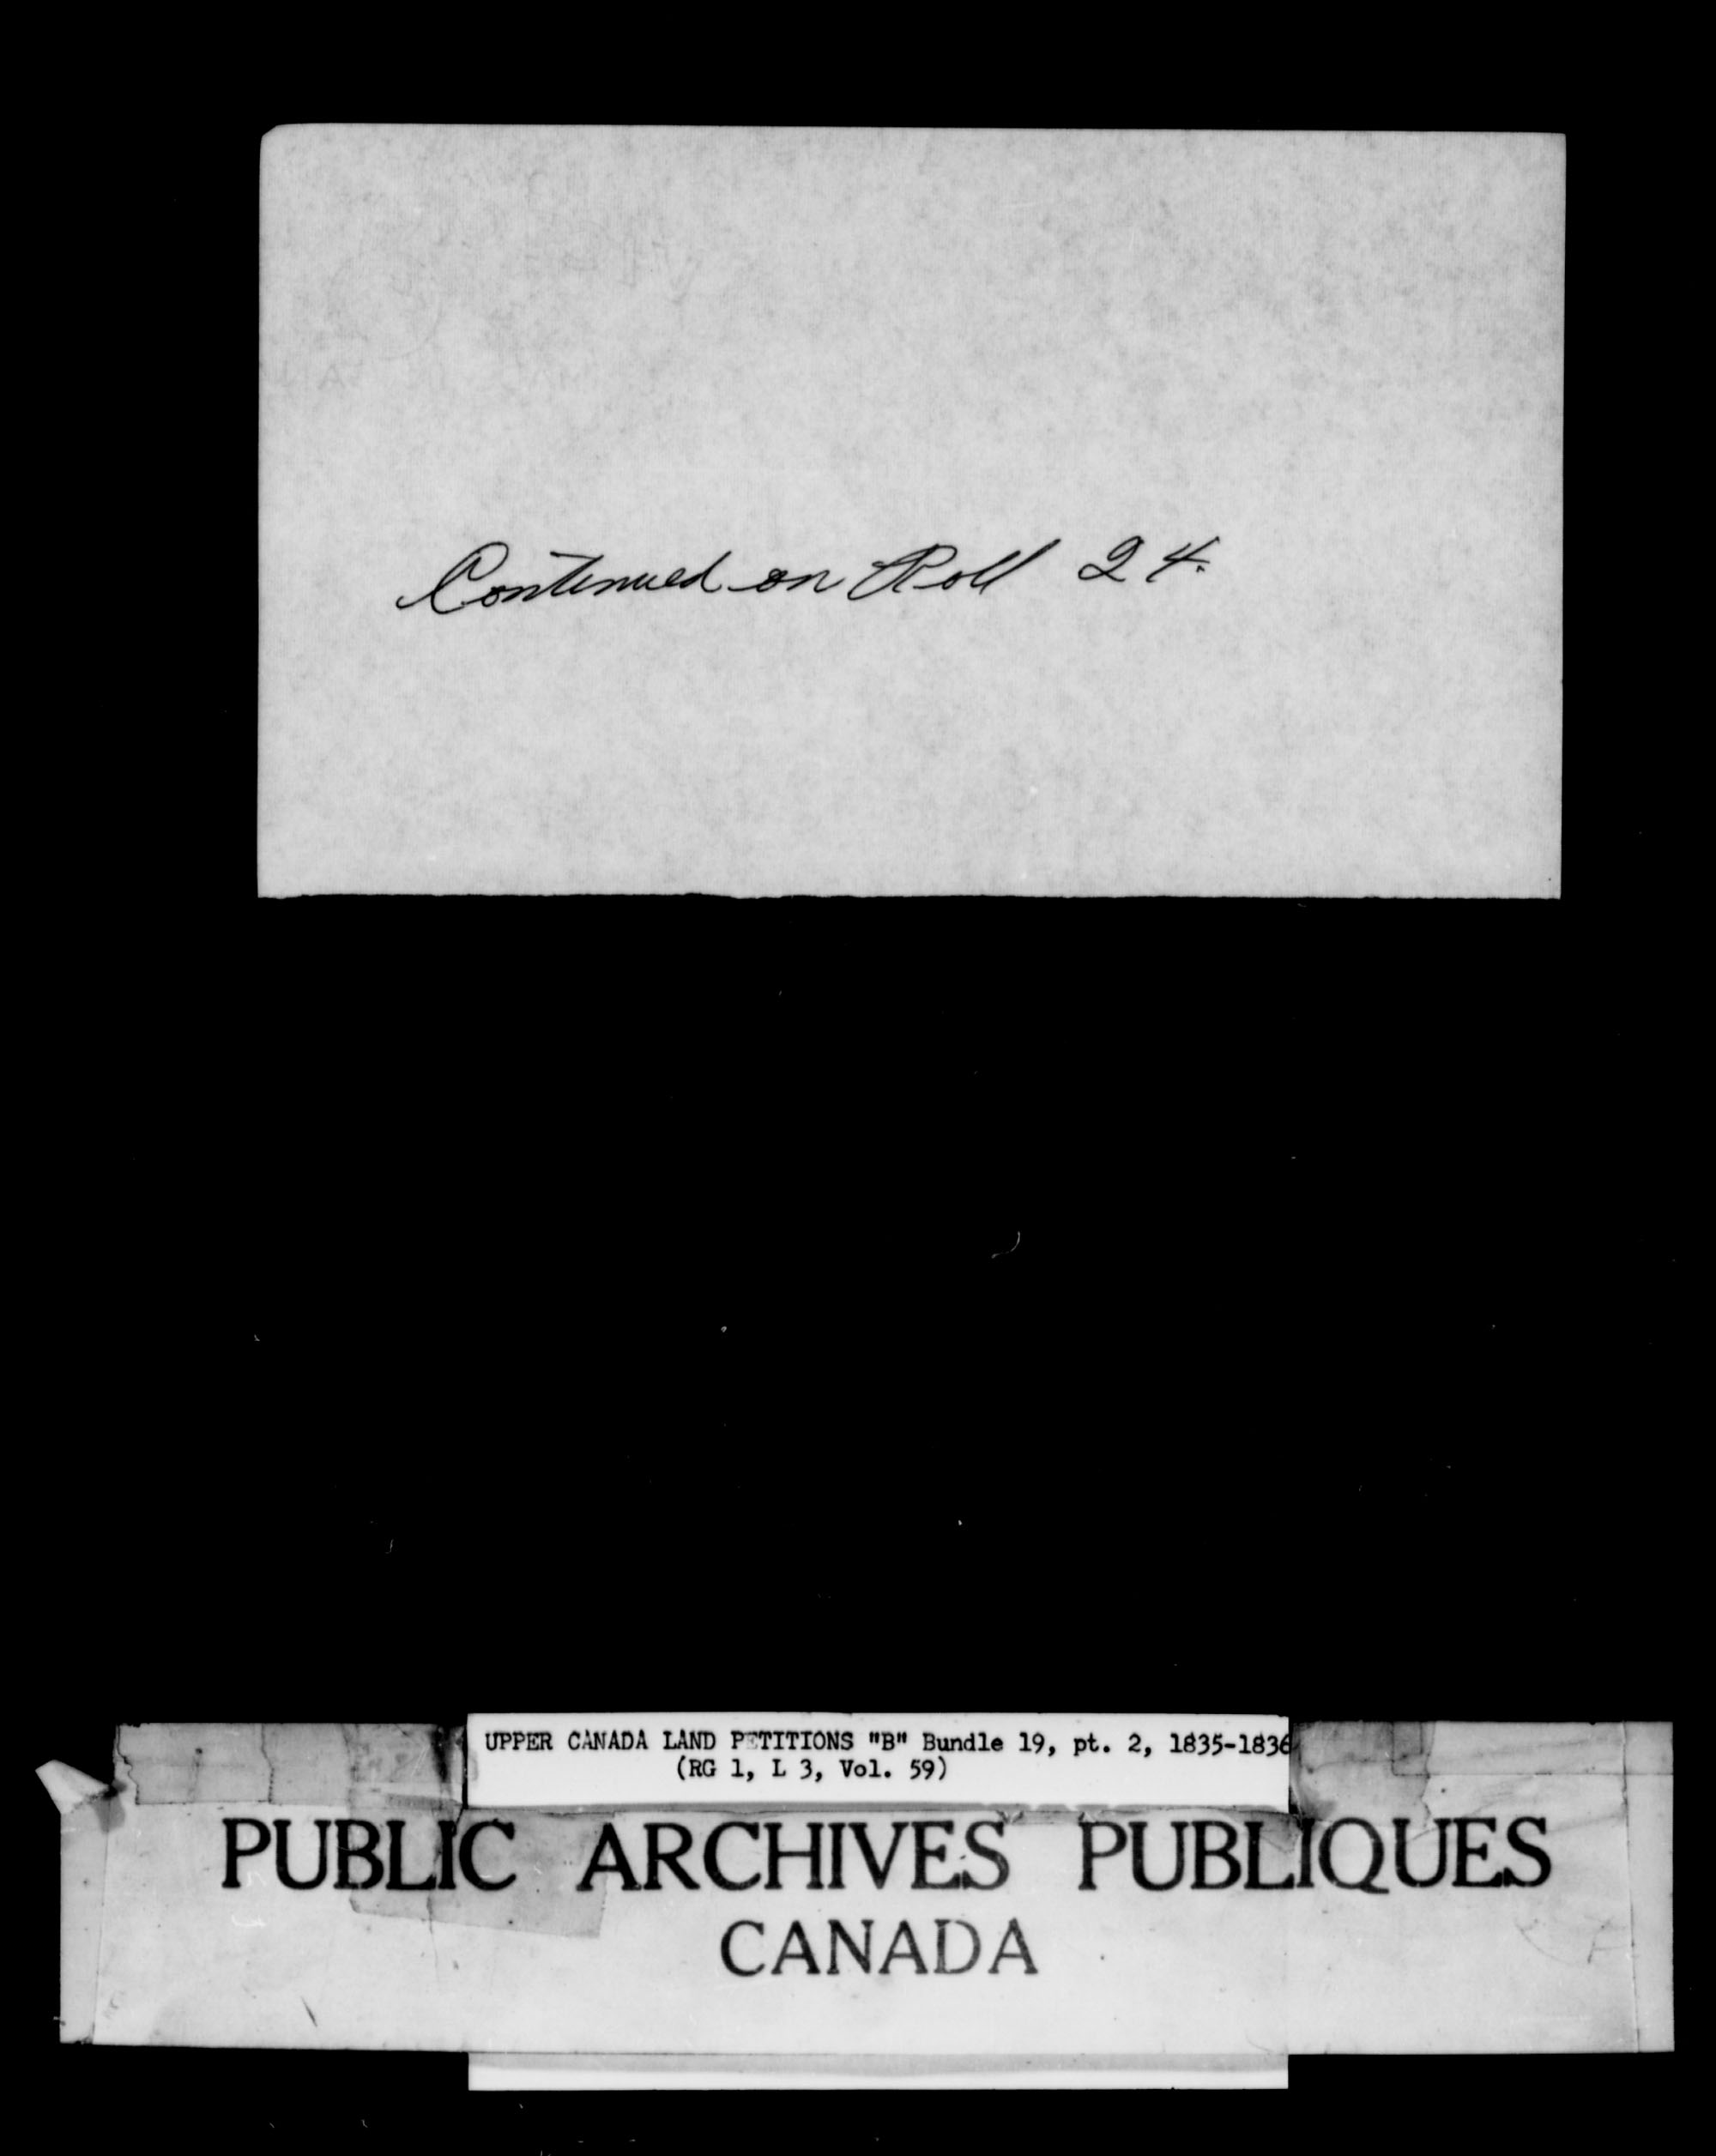 Titre : Demandes de terres du Haut-Canada (1763-1865) - N d'enregistrement Mikan : 205131 - Microforme : c-1631